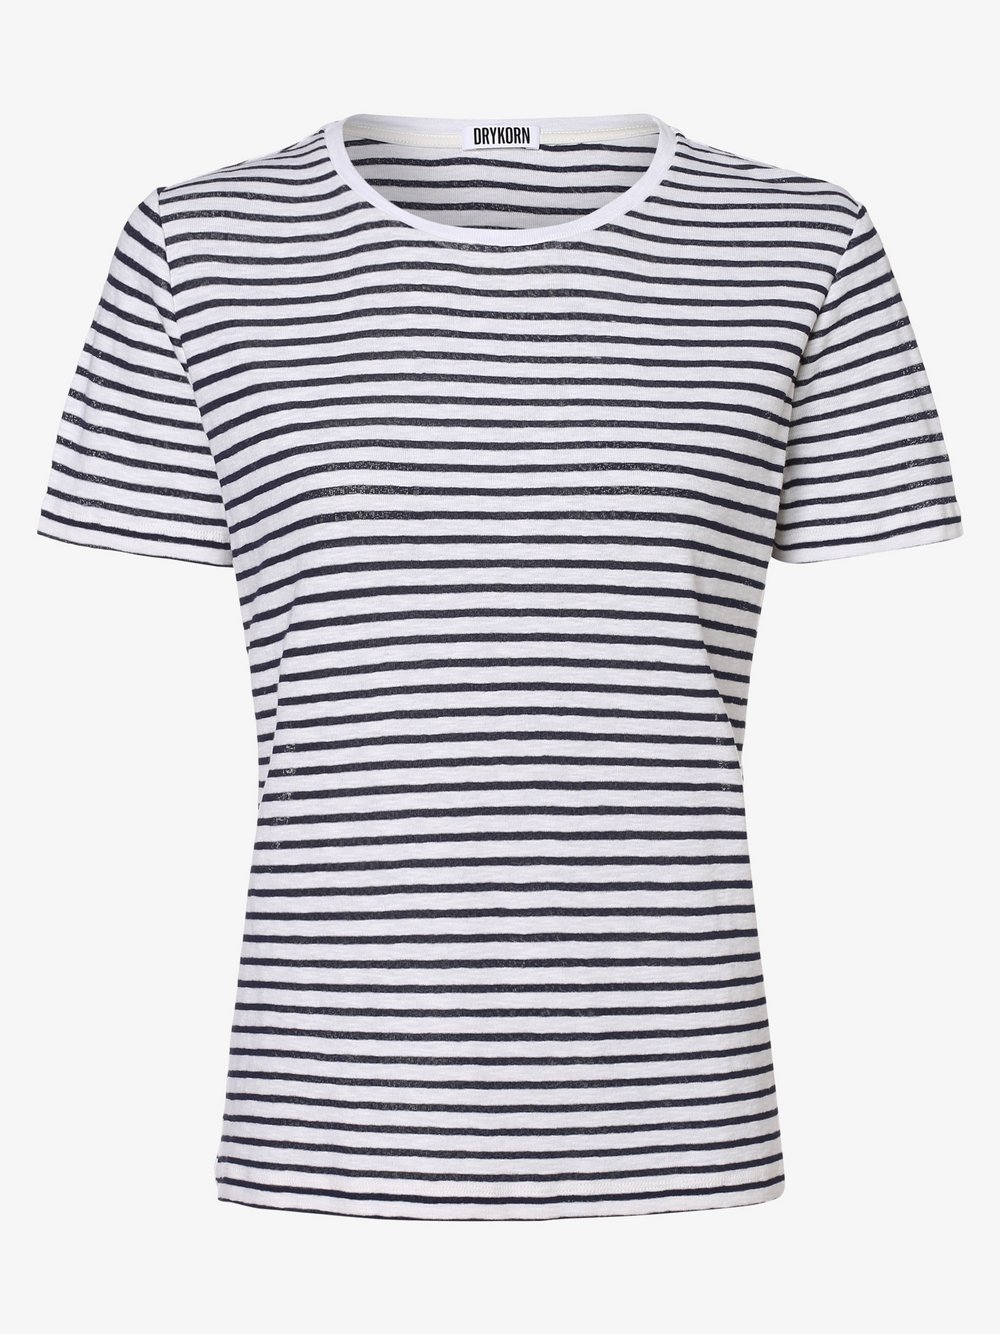 Drykorn - T-shirt damski – Anisia, niebieski